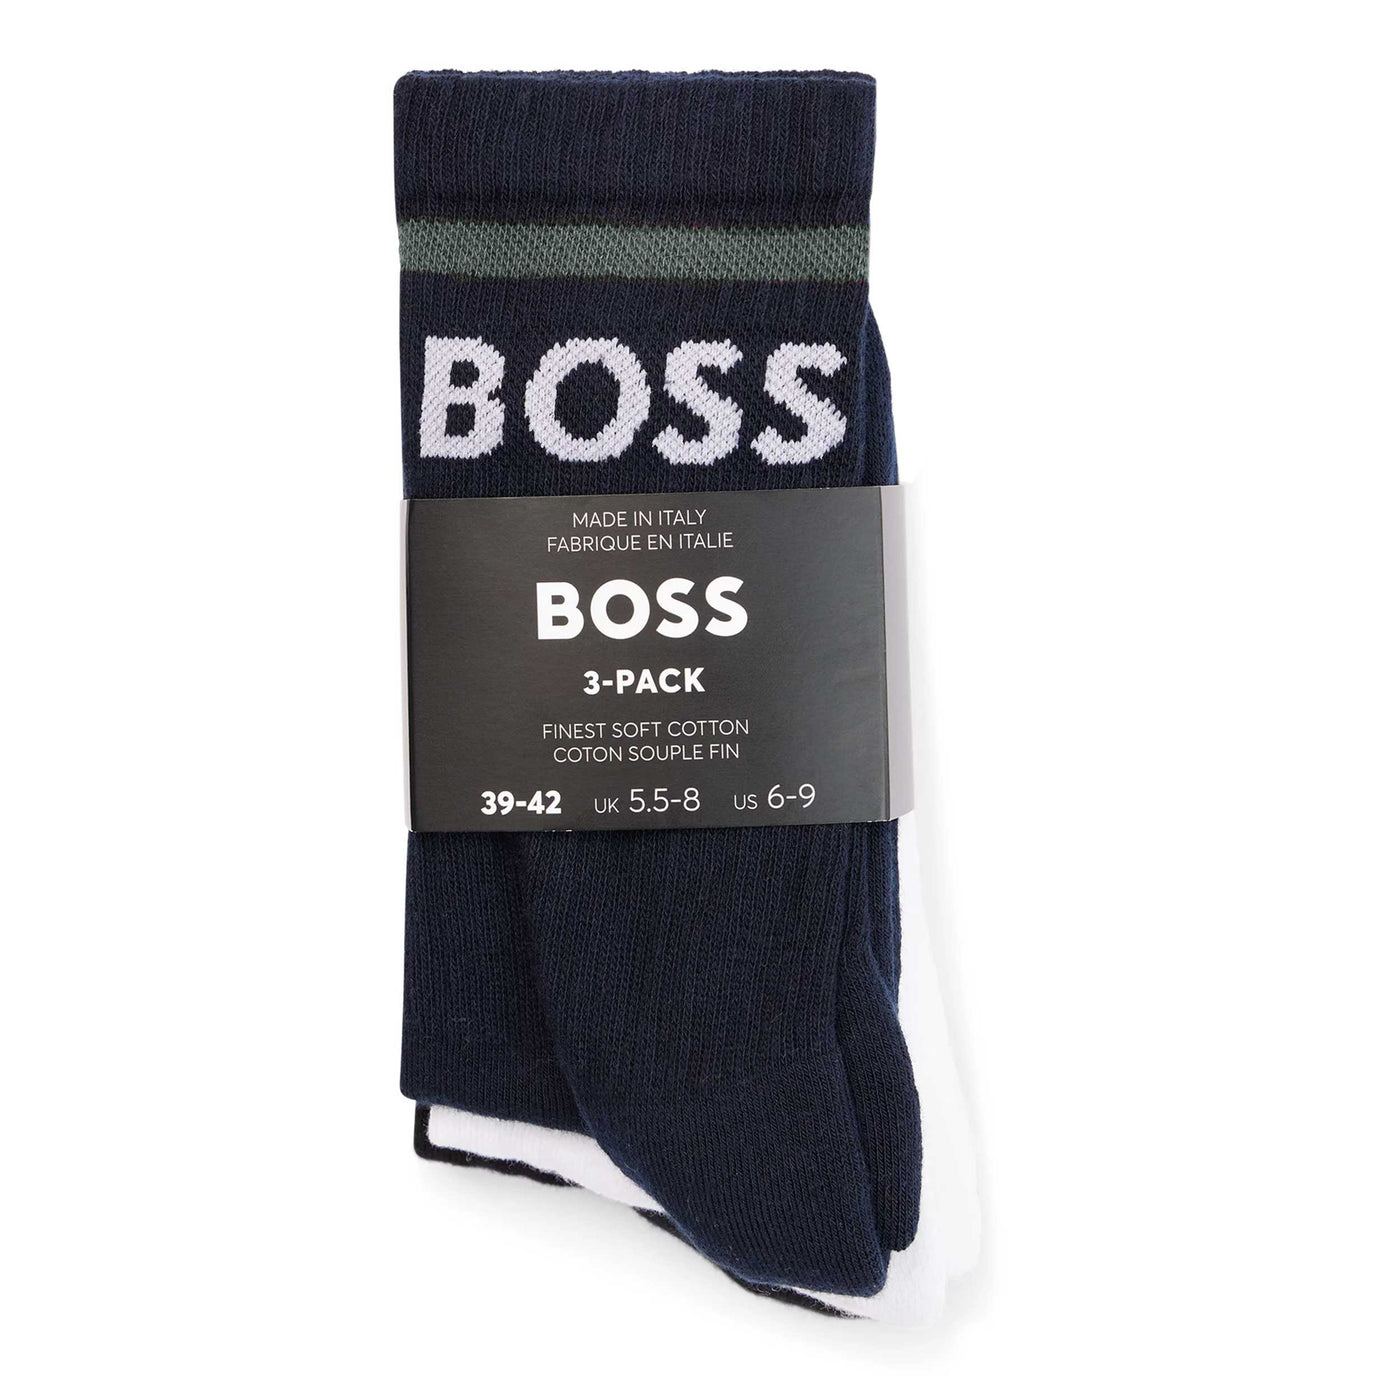 BOSS 3P Rib Stripe CC Sock in Black, Navy & White Pair